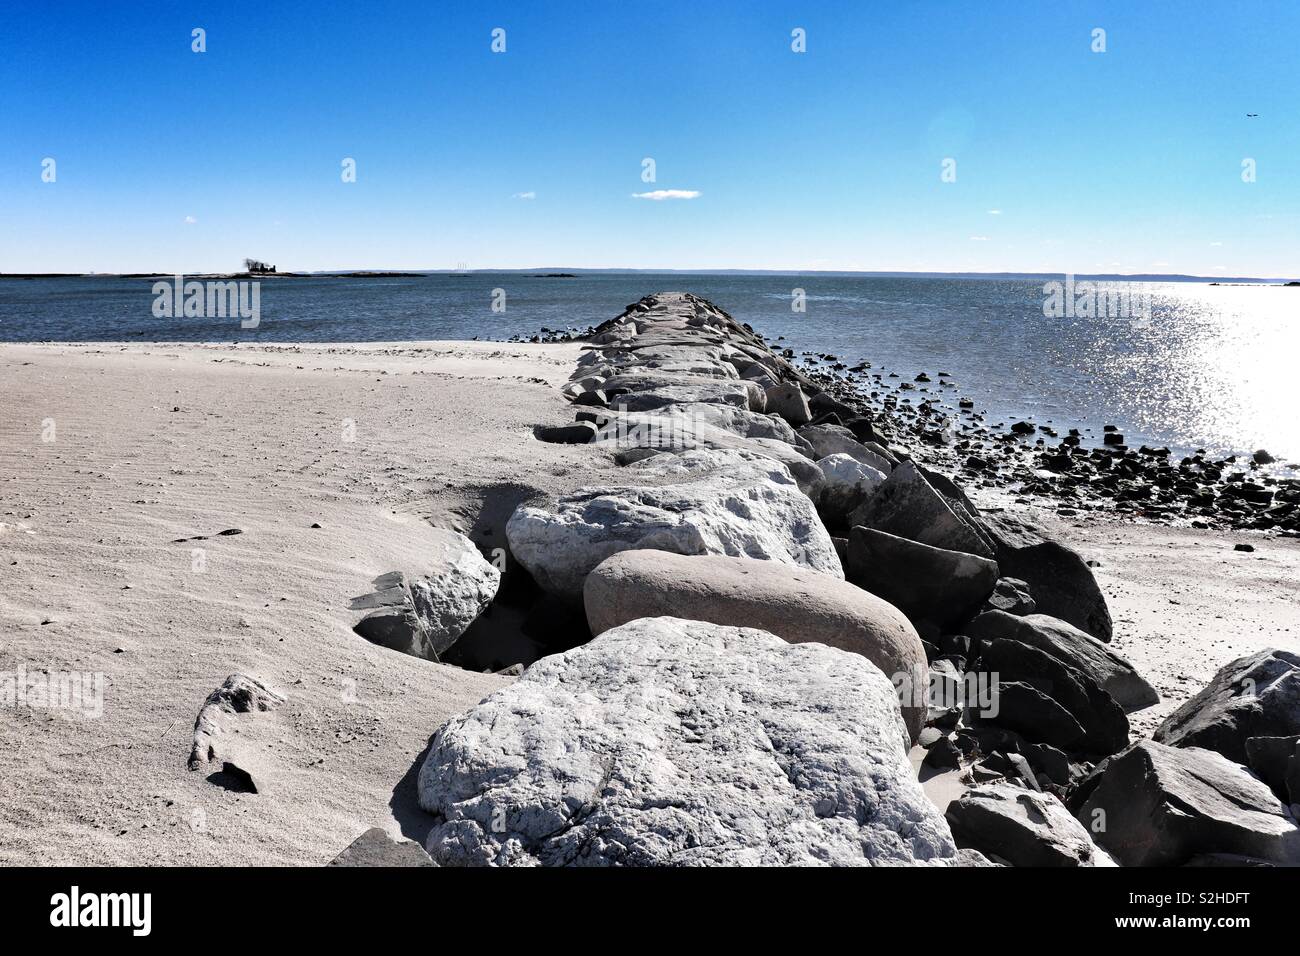 Rocks forming a sandbreak on the beach Stock Photo